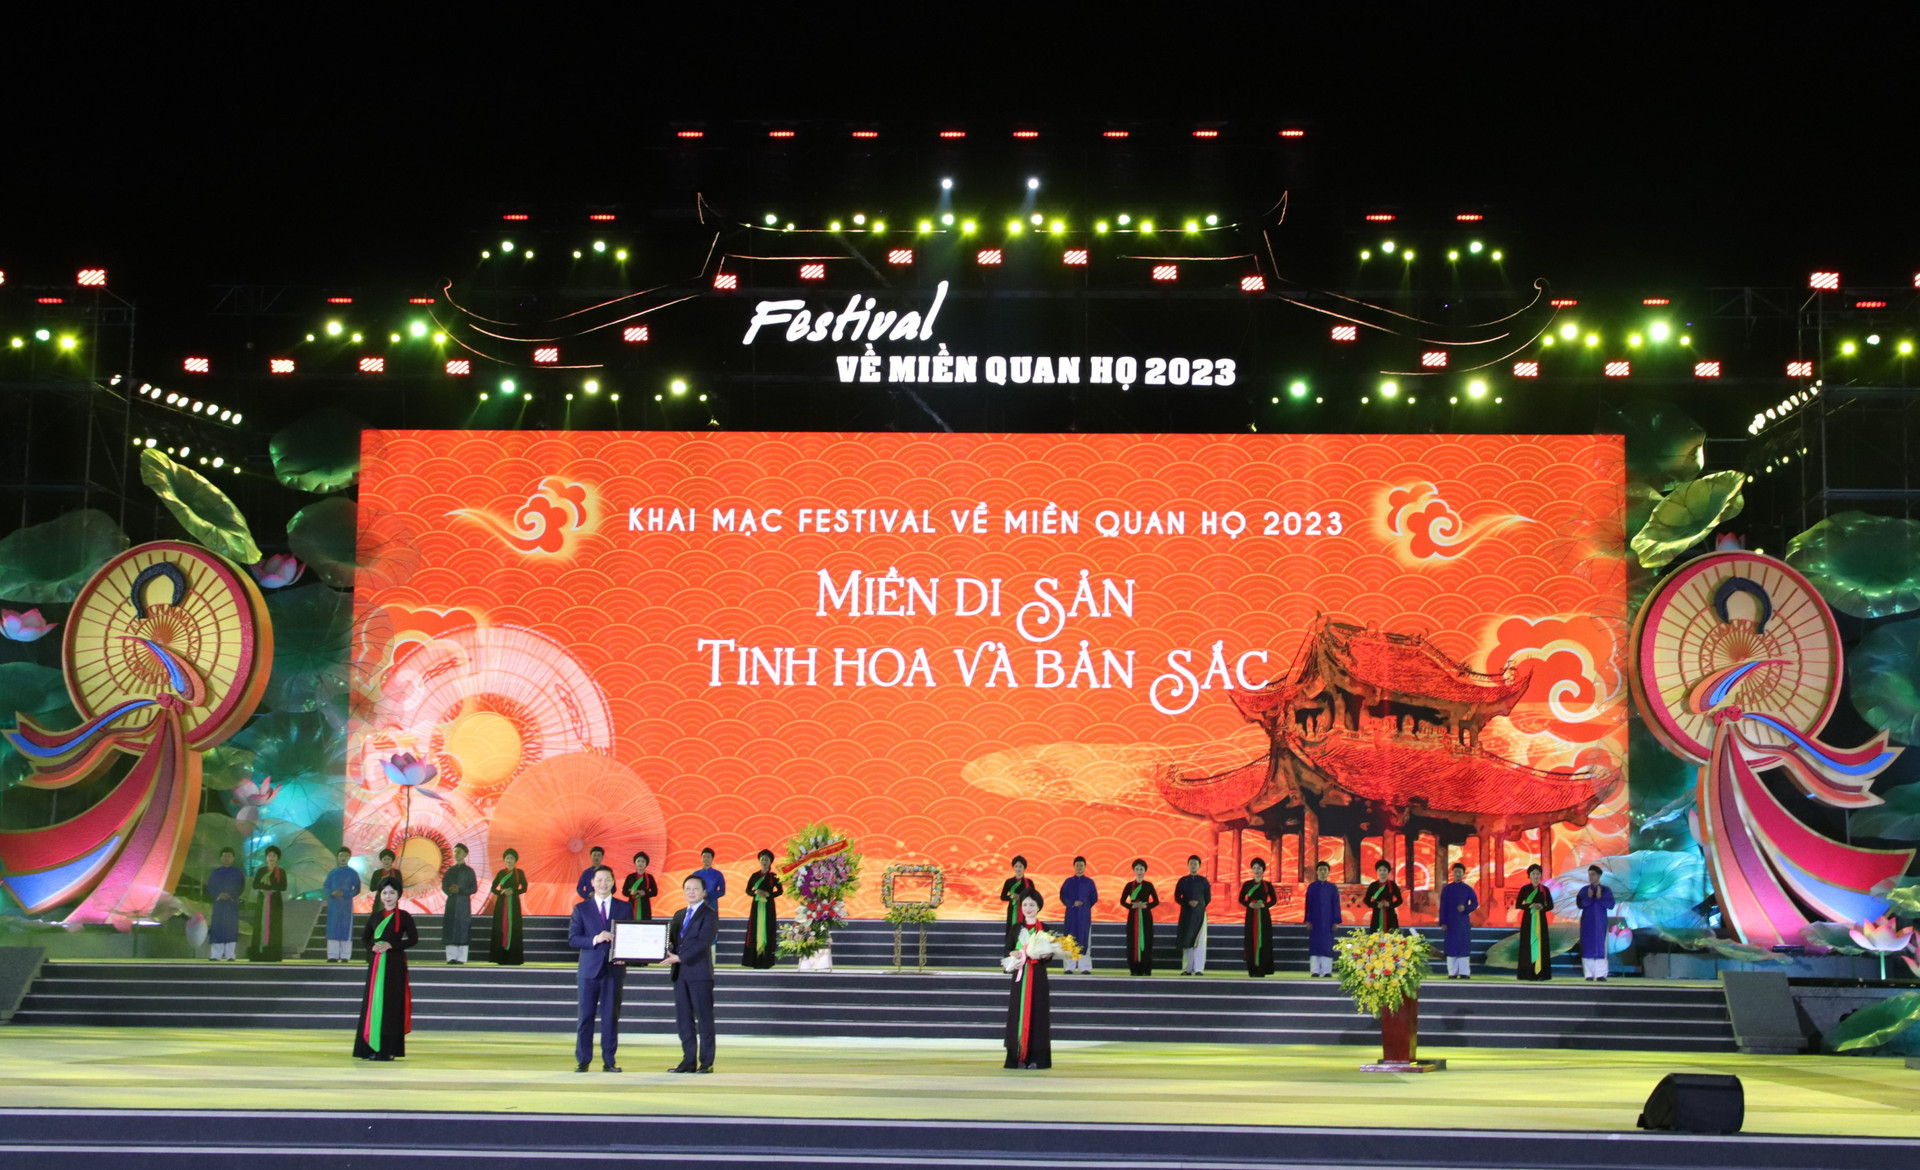 Bắc Ninh: Khai mạc Festival “Về miền Quan họ 2023”